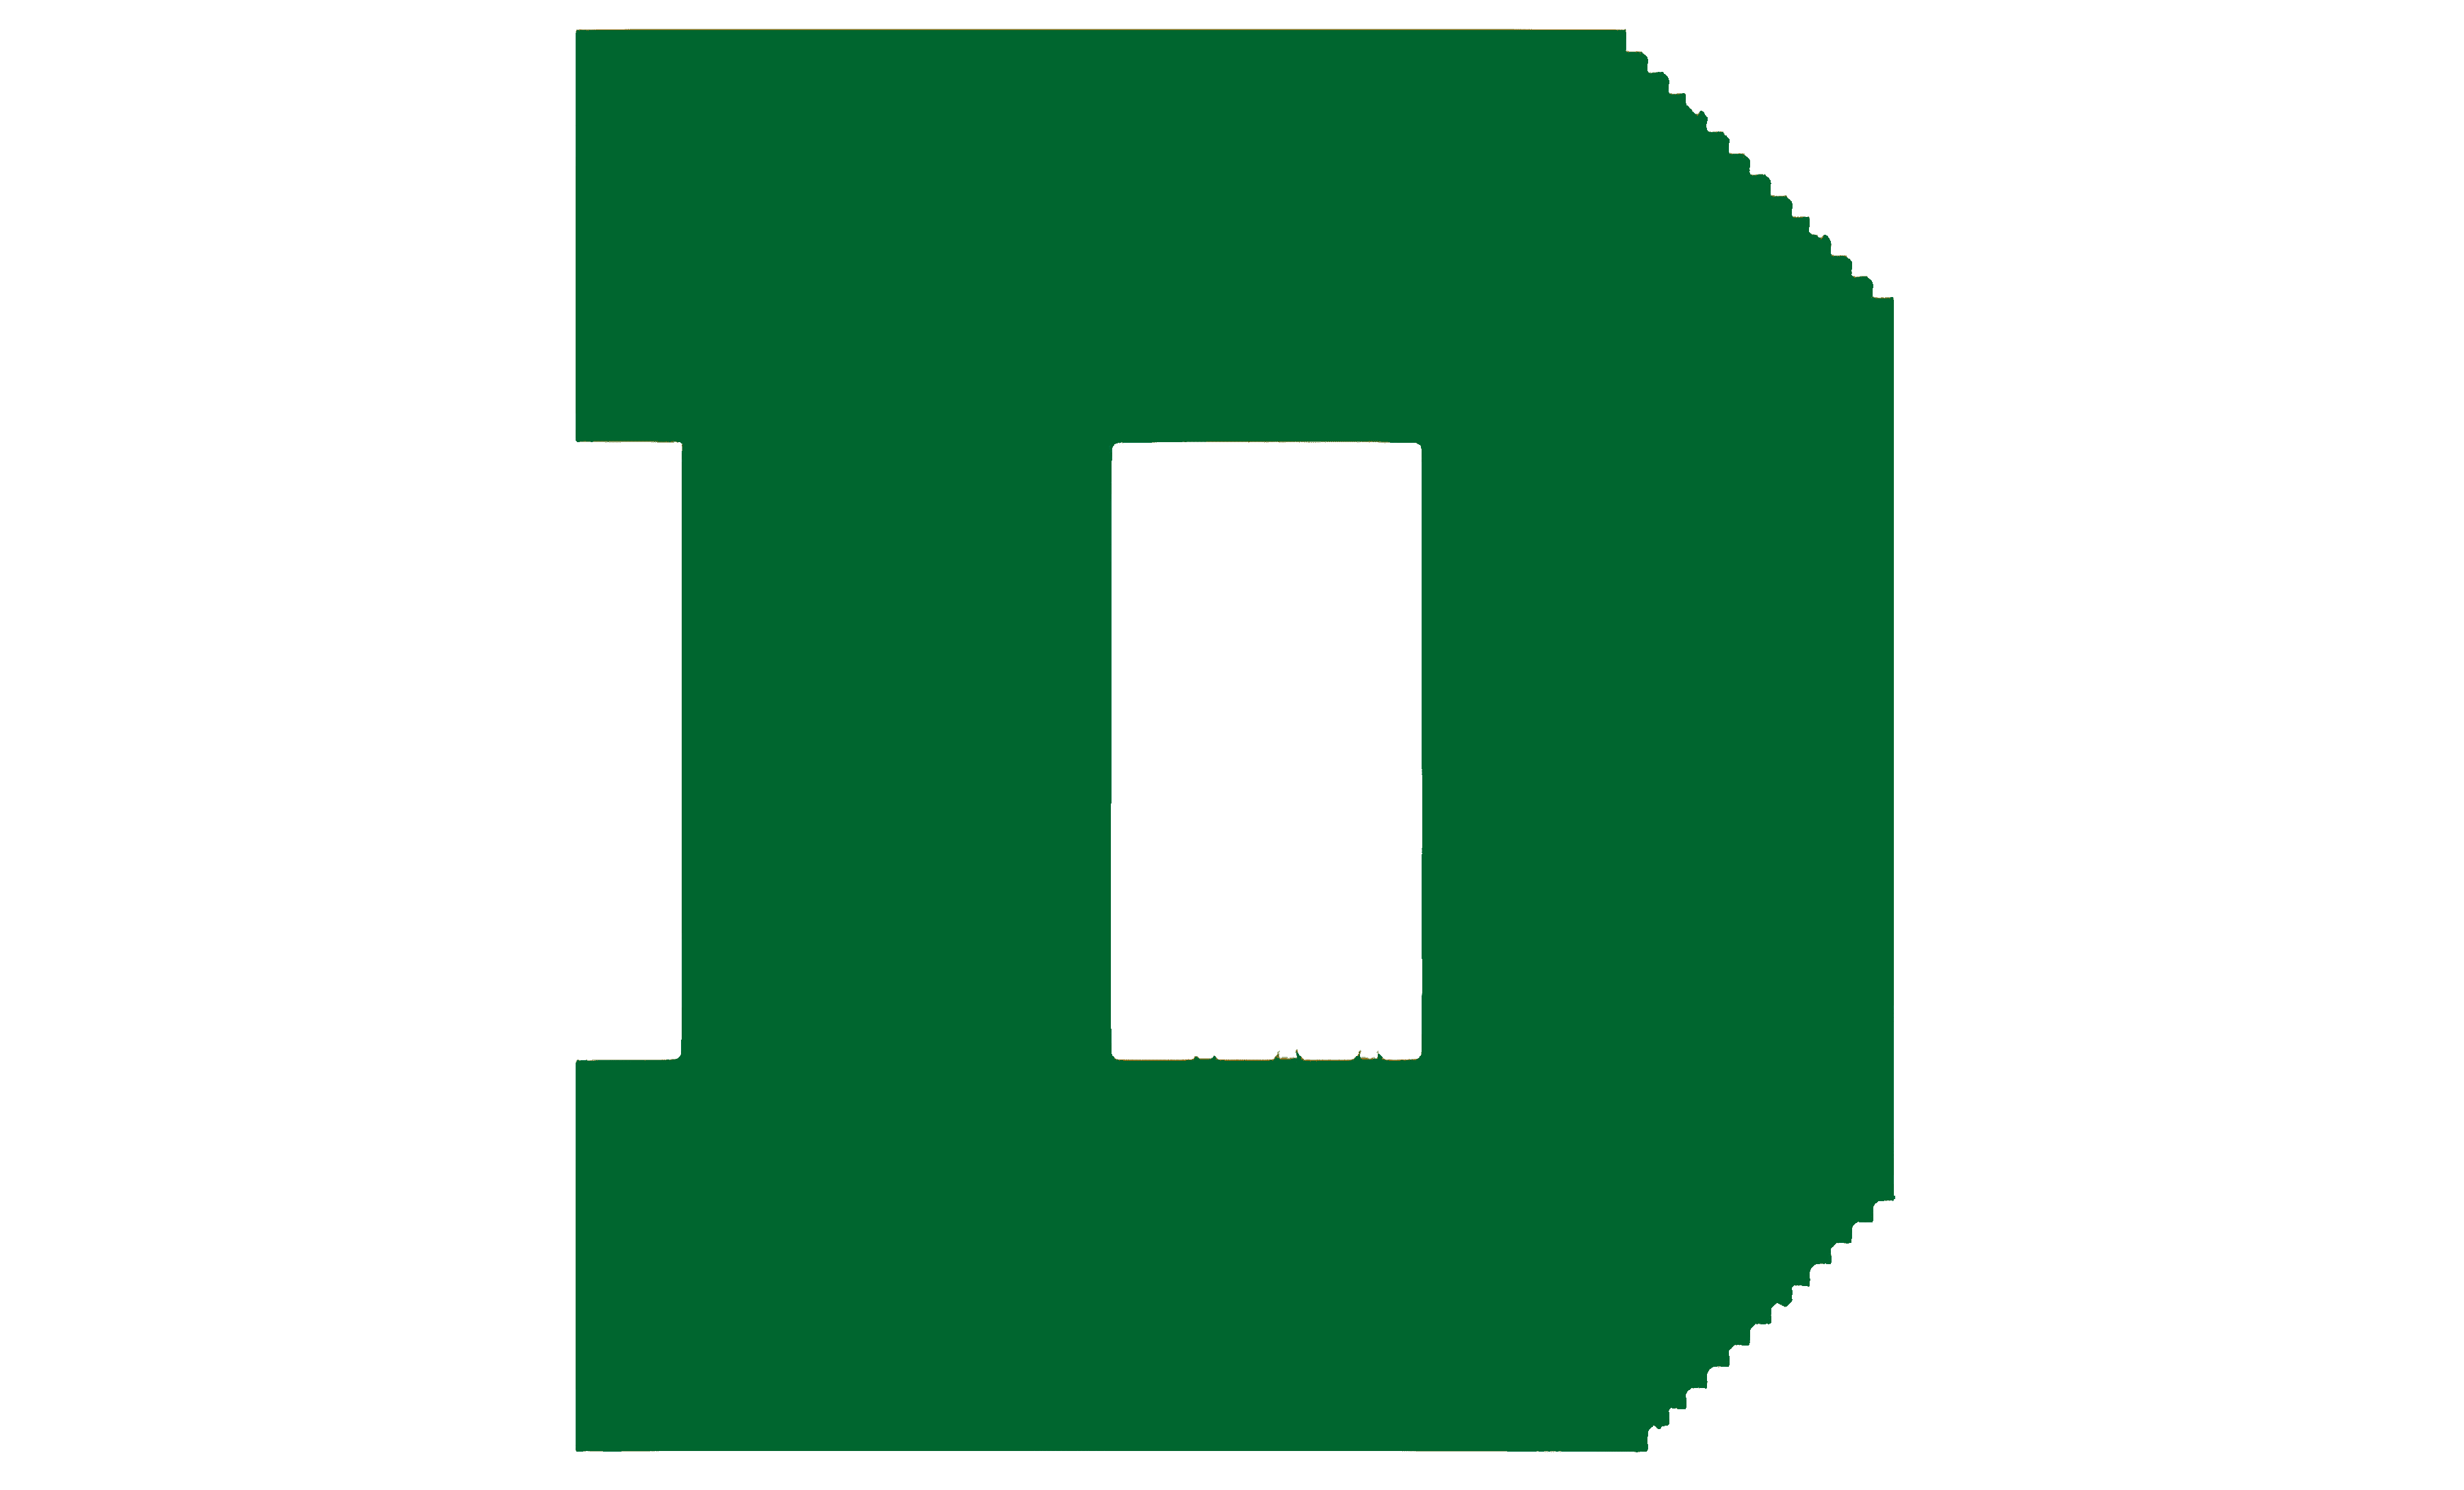 big green dartmouth college logo